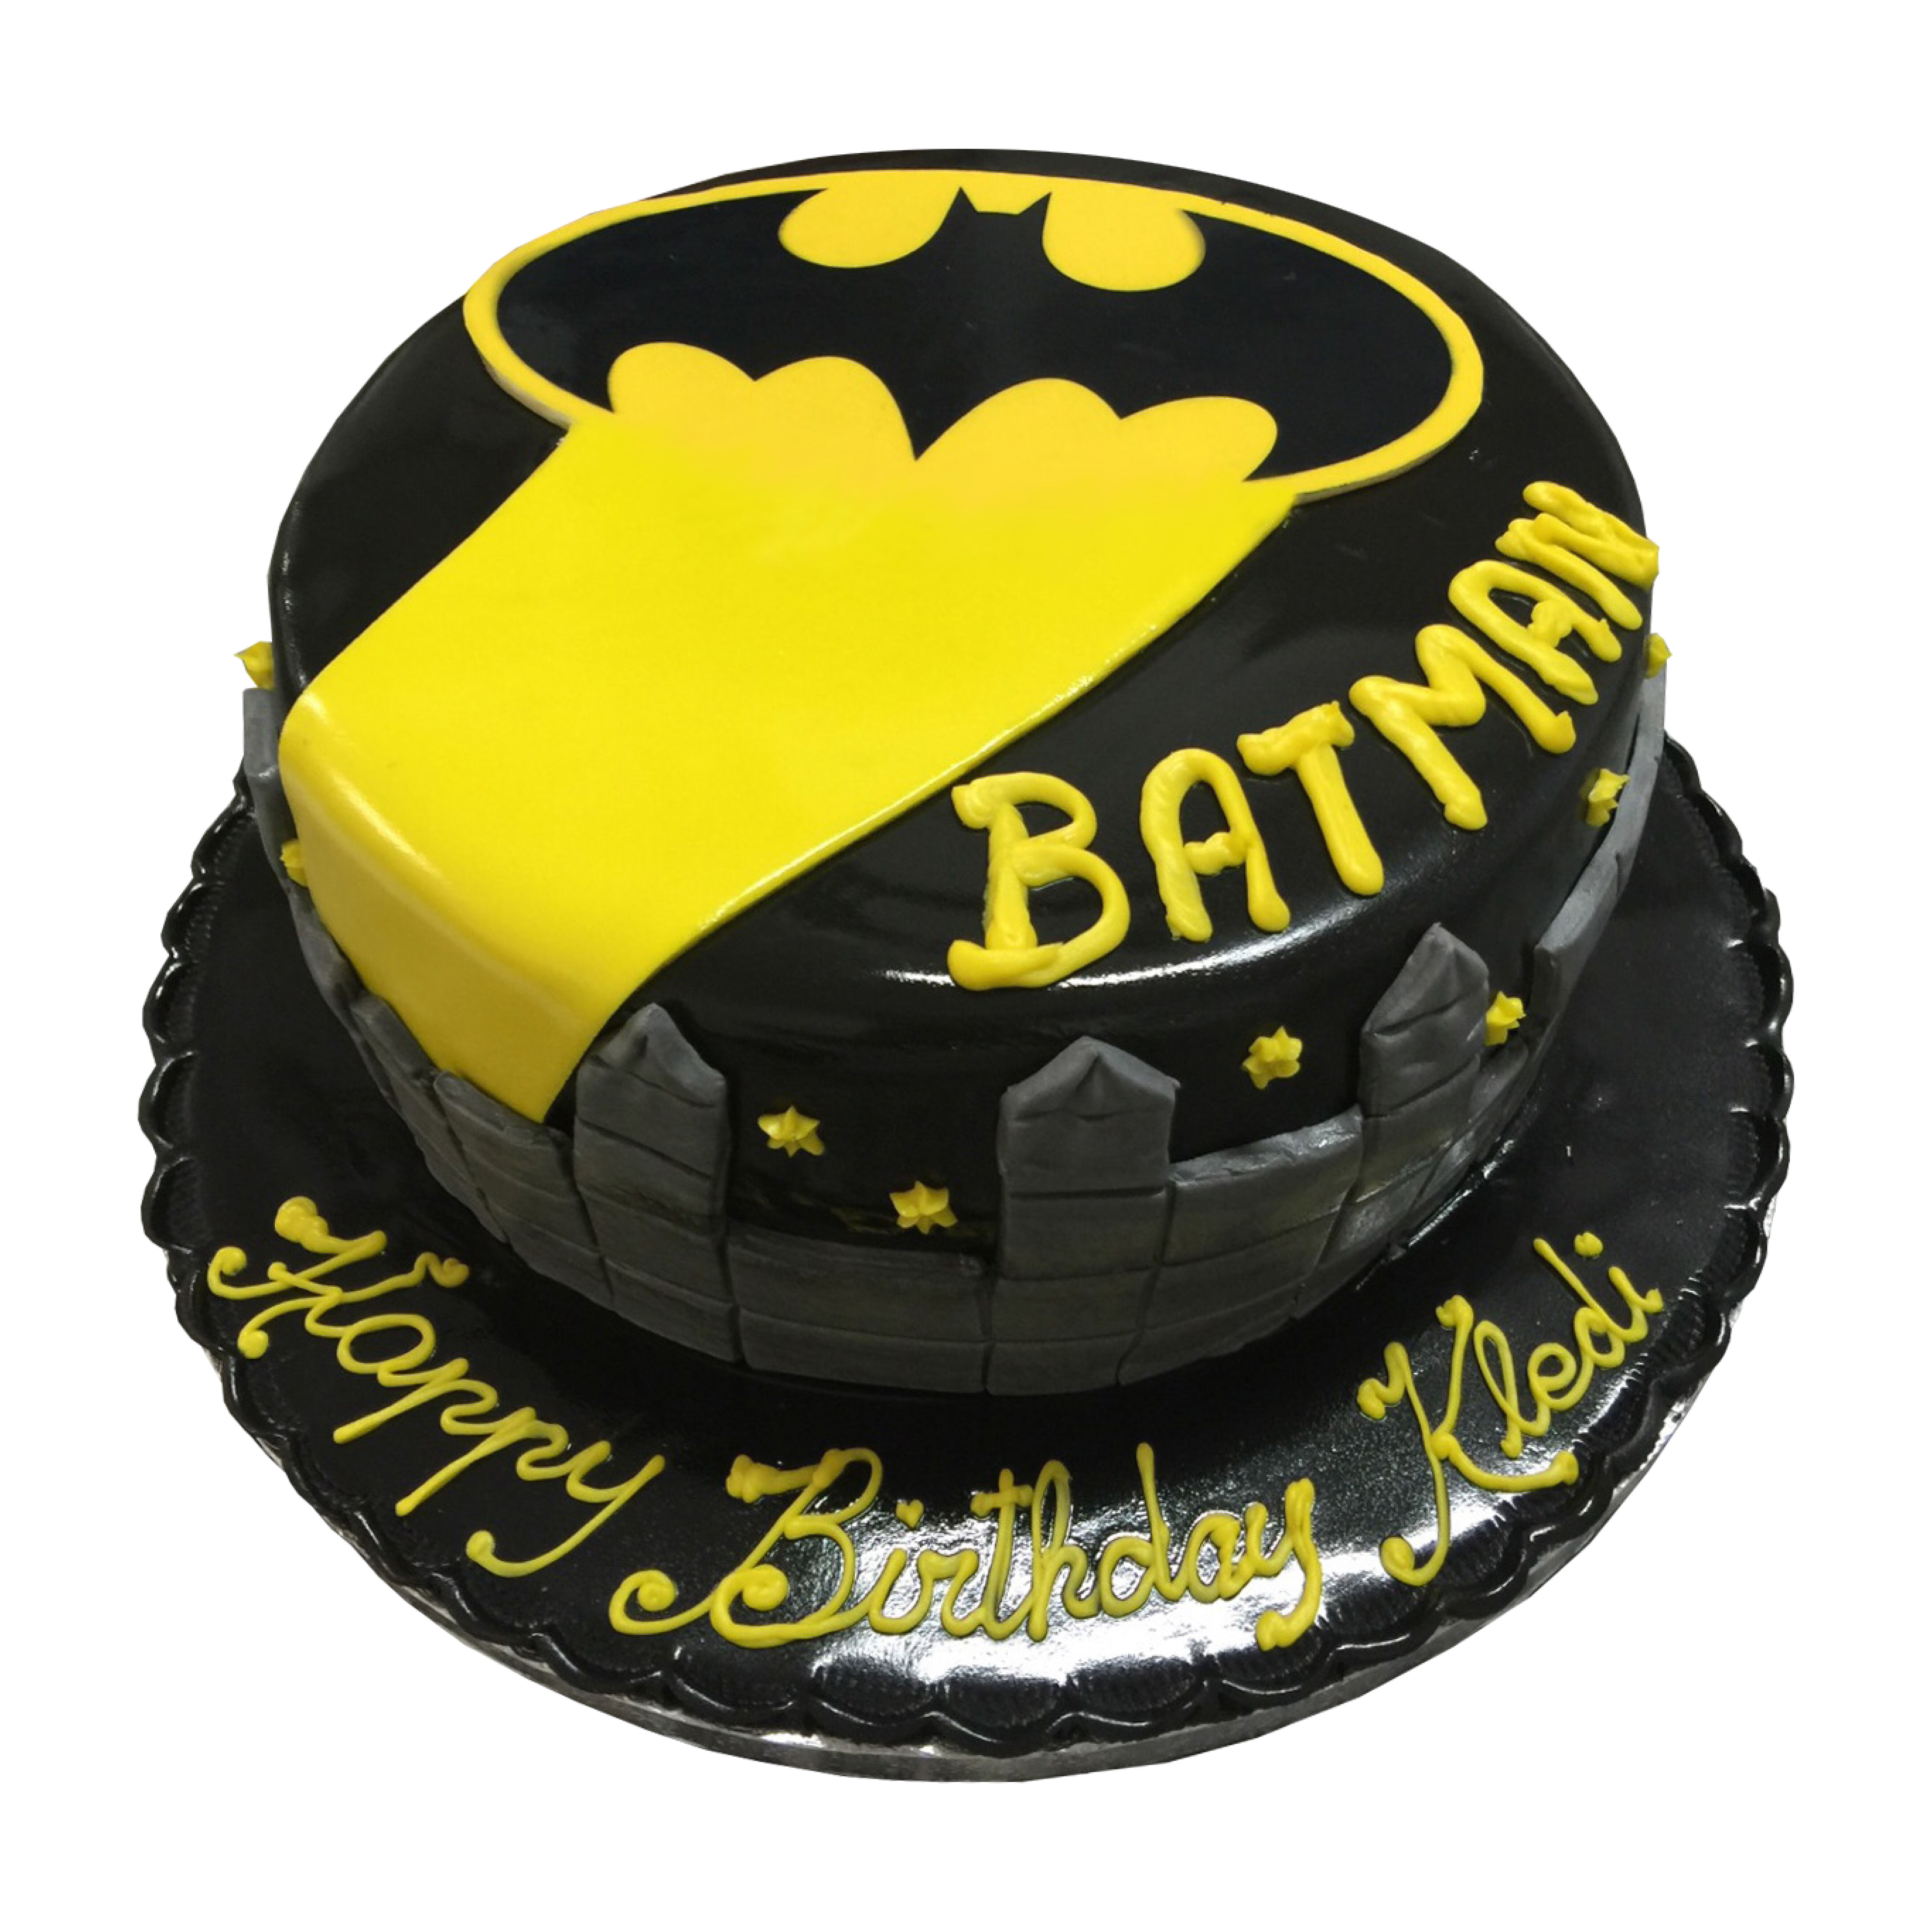 Batman logo cake 2